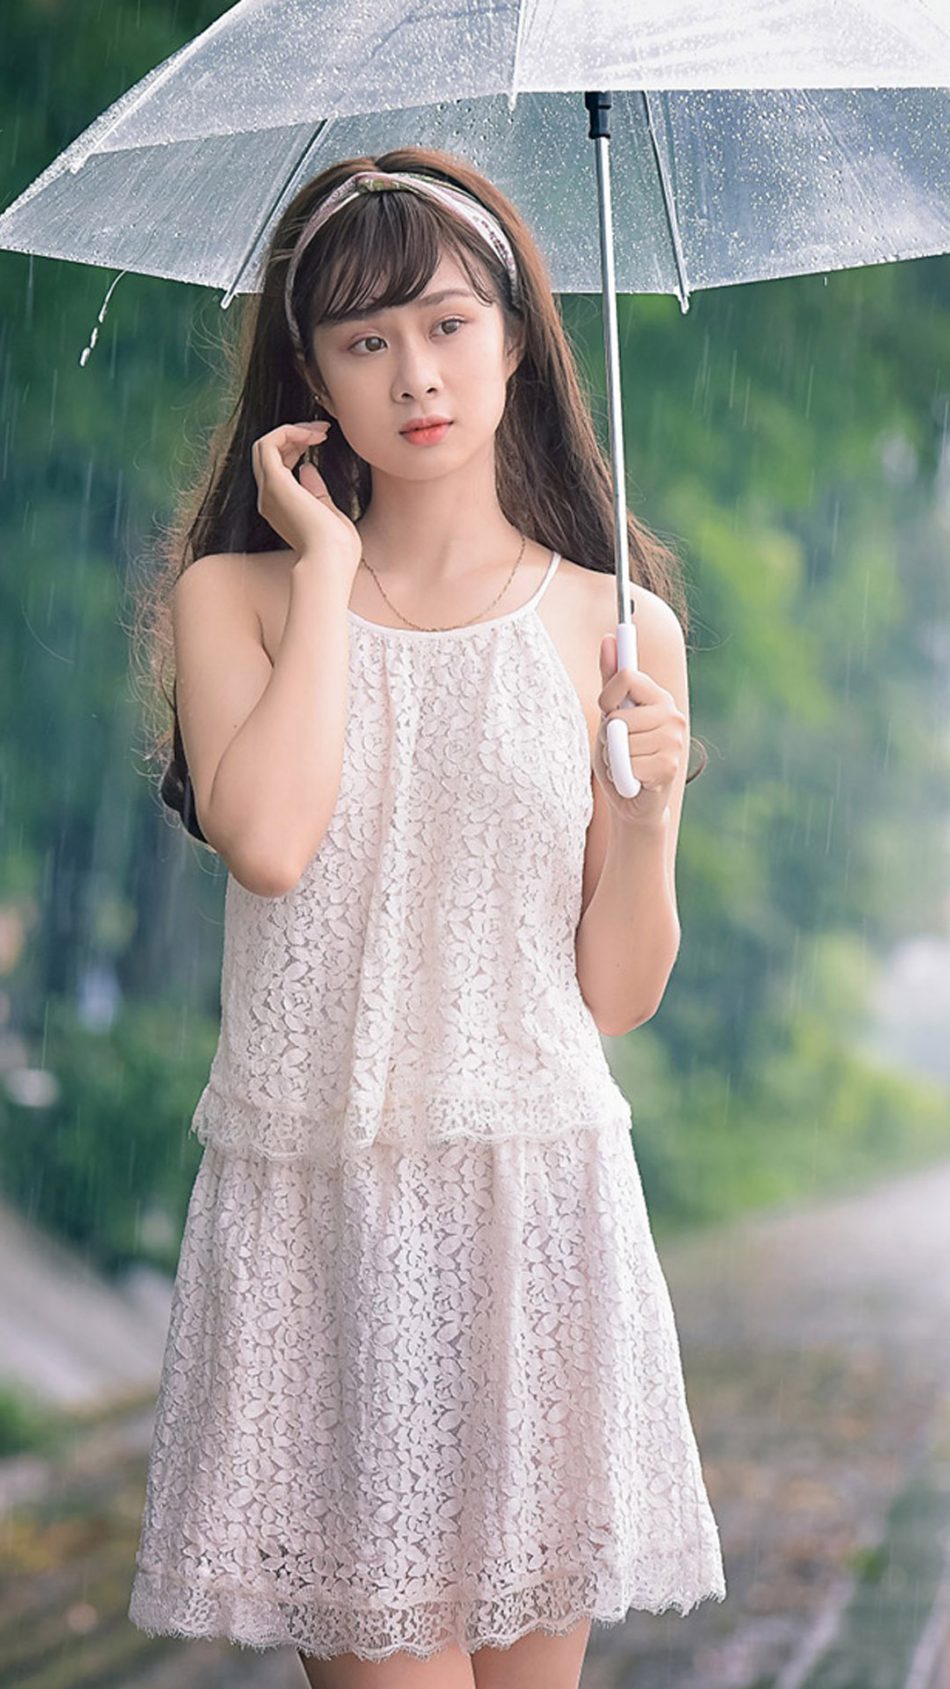 Cute Asian Girl Posing In Rain 4K Ultra HD Mobile Wallpaper